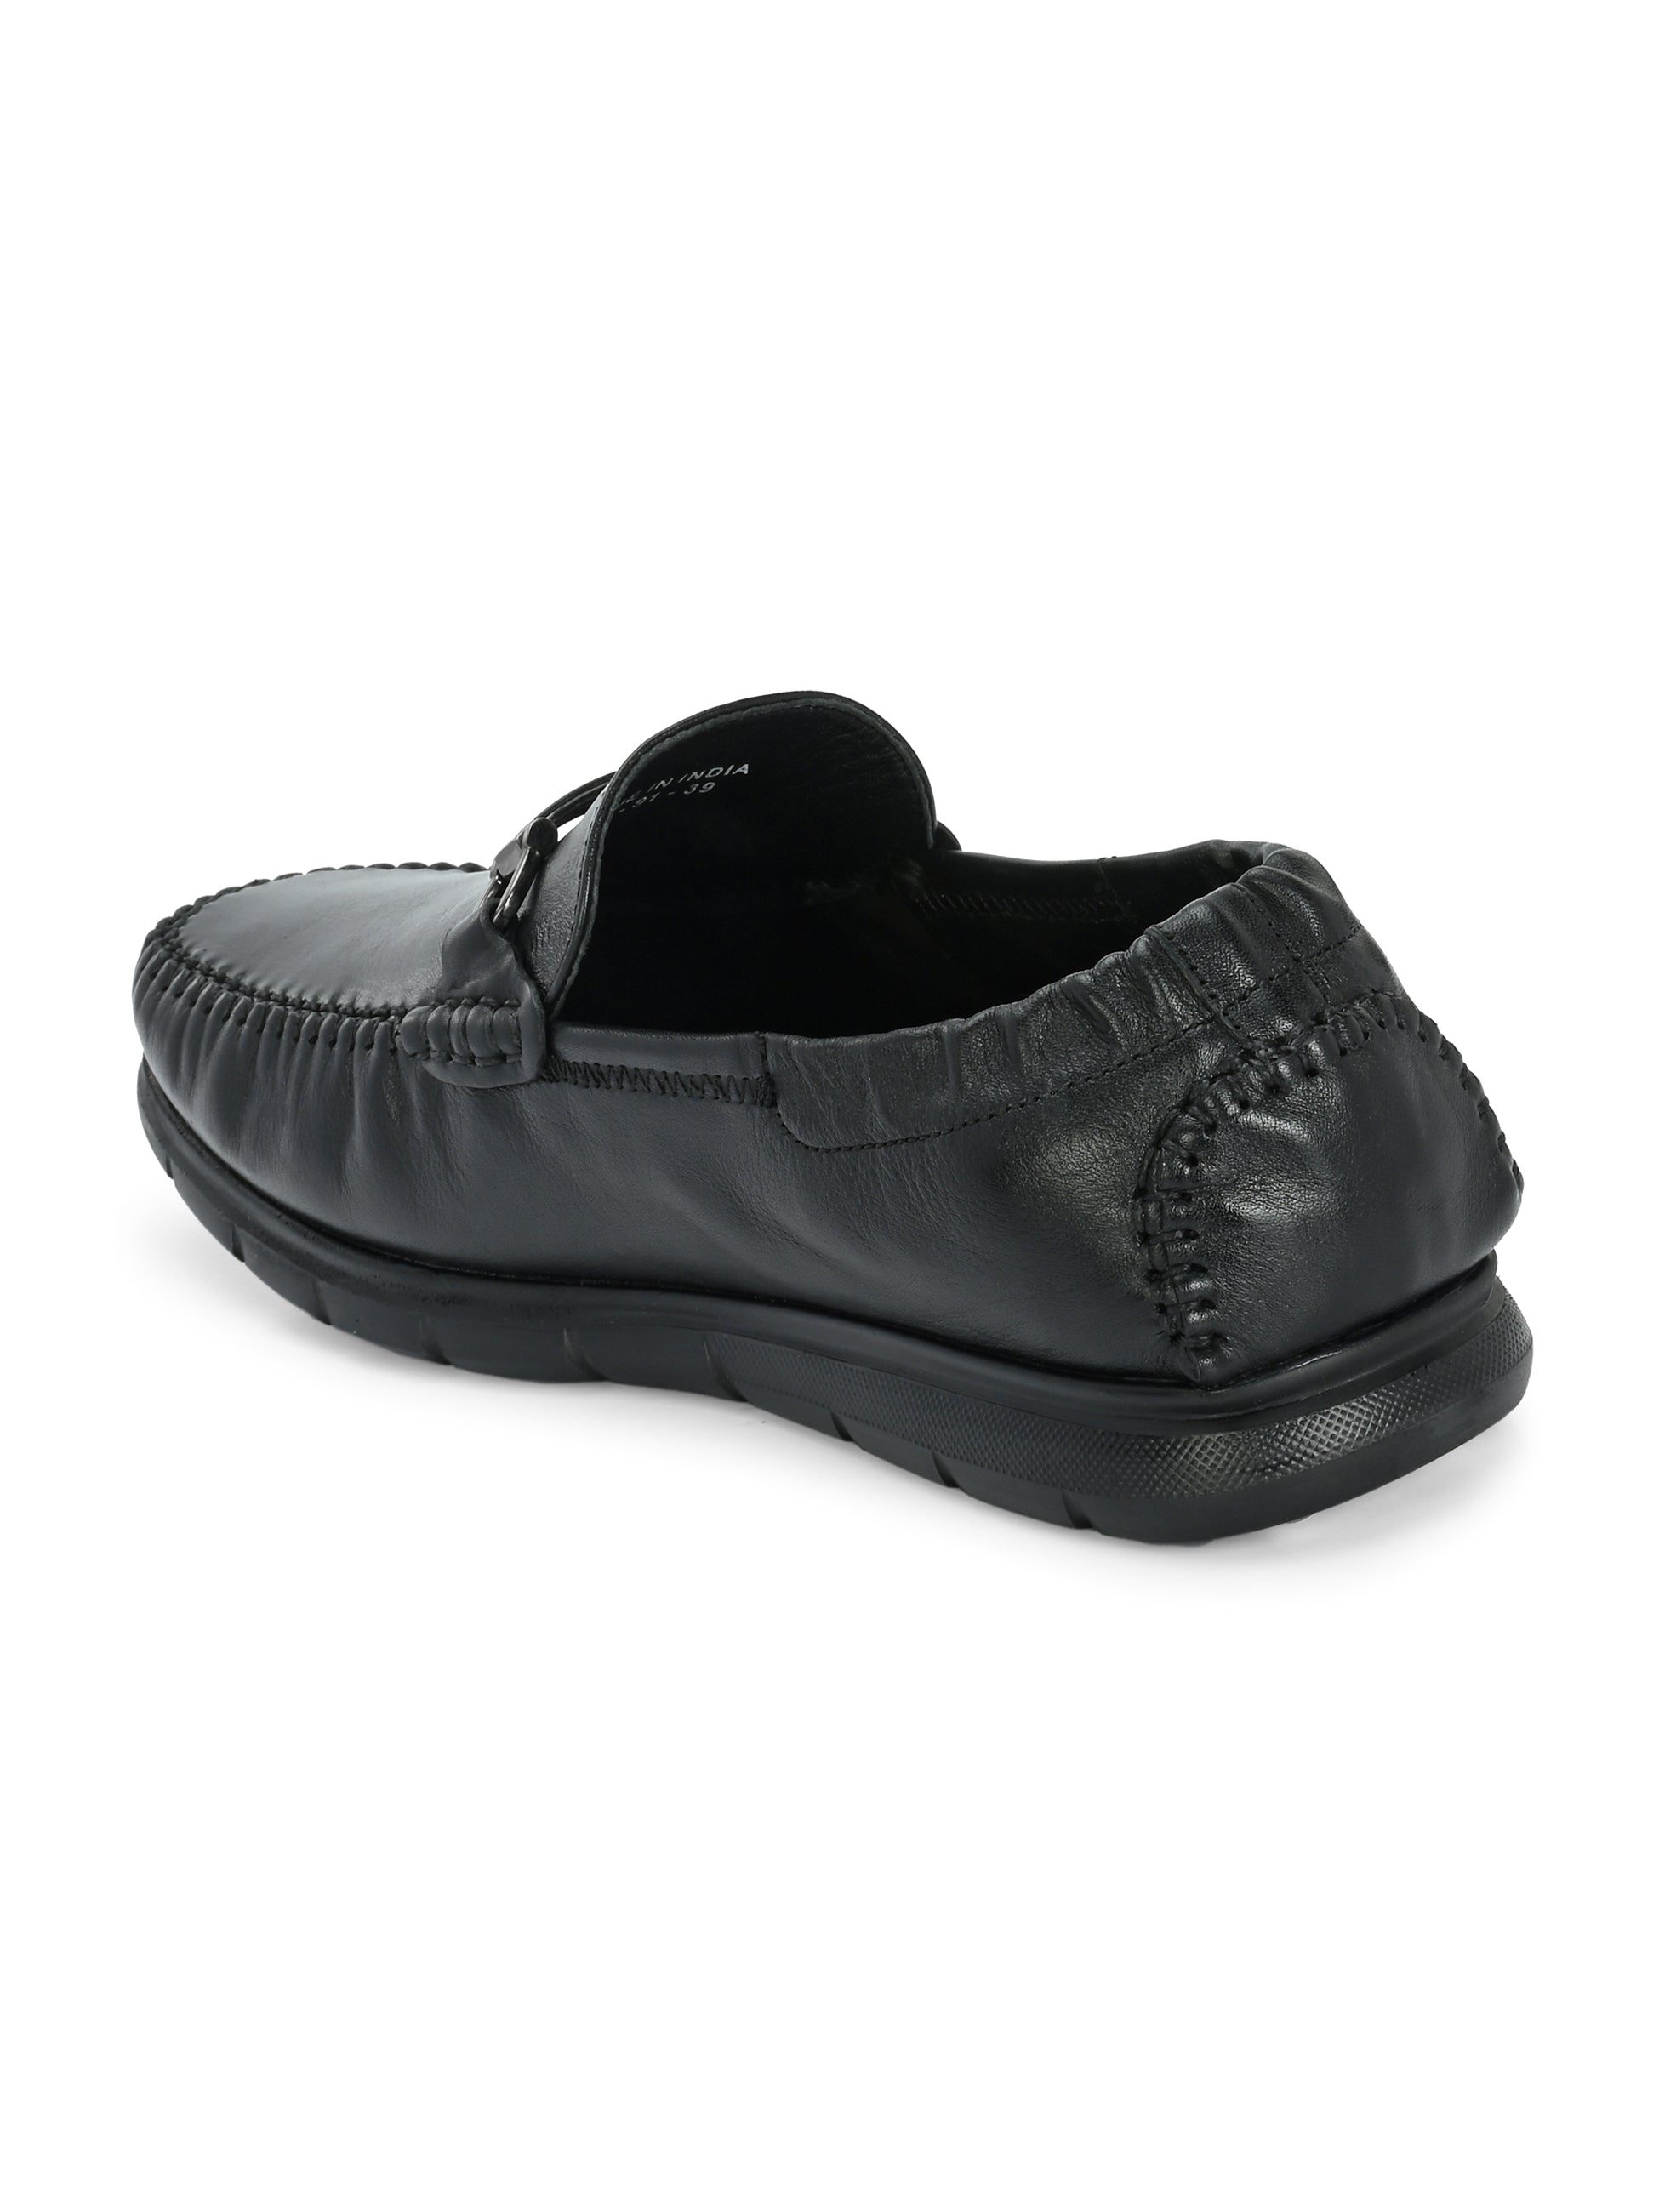 Zero Gravity Premium Loafers For Men